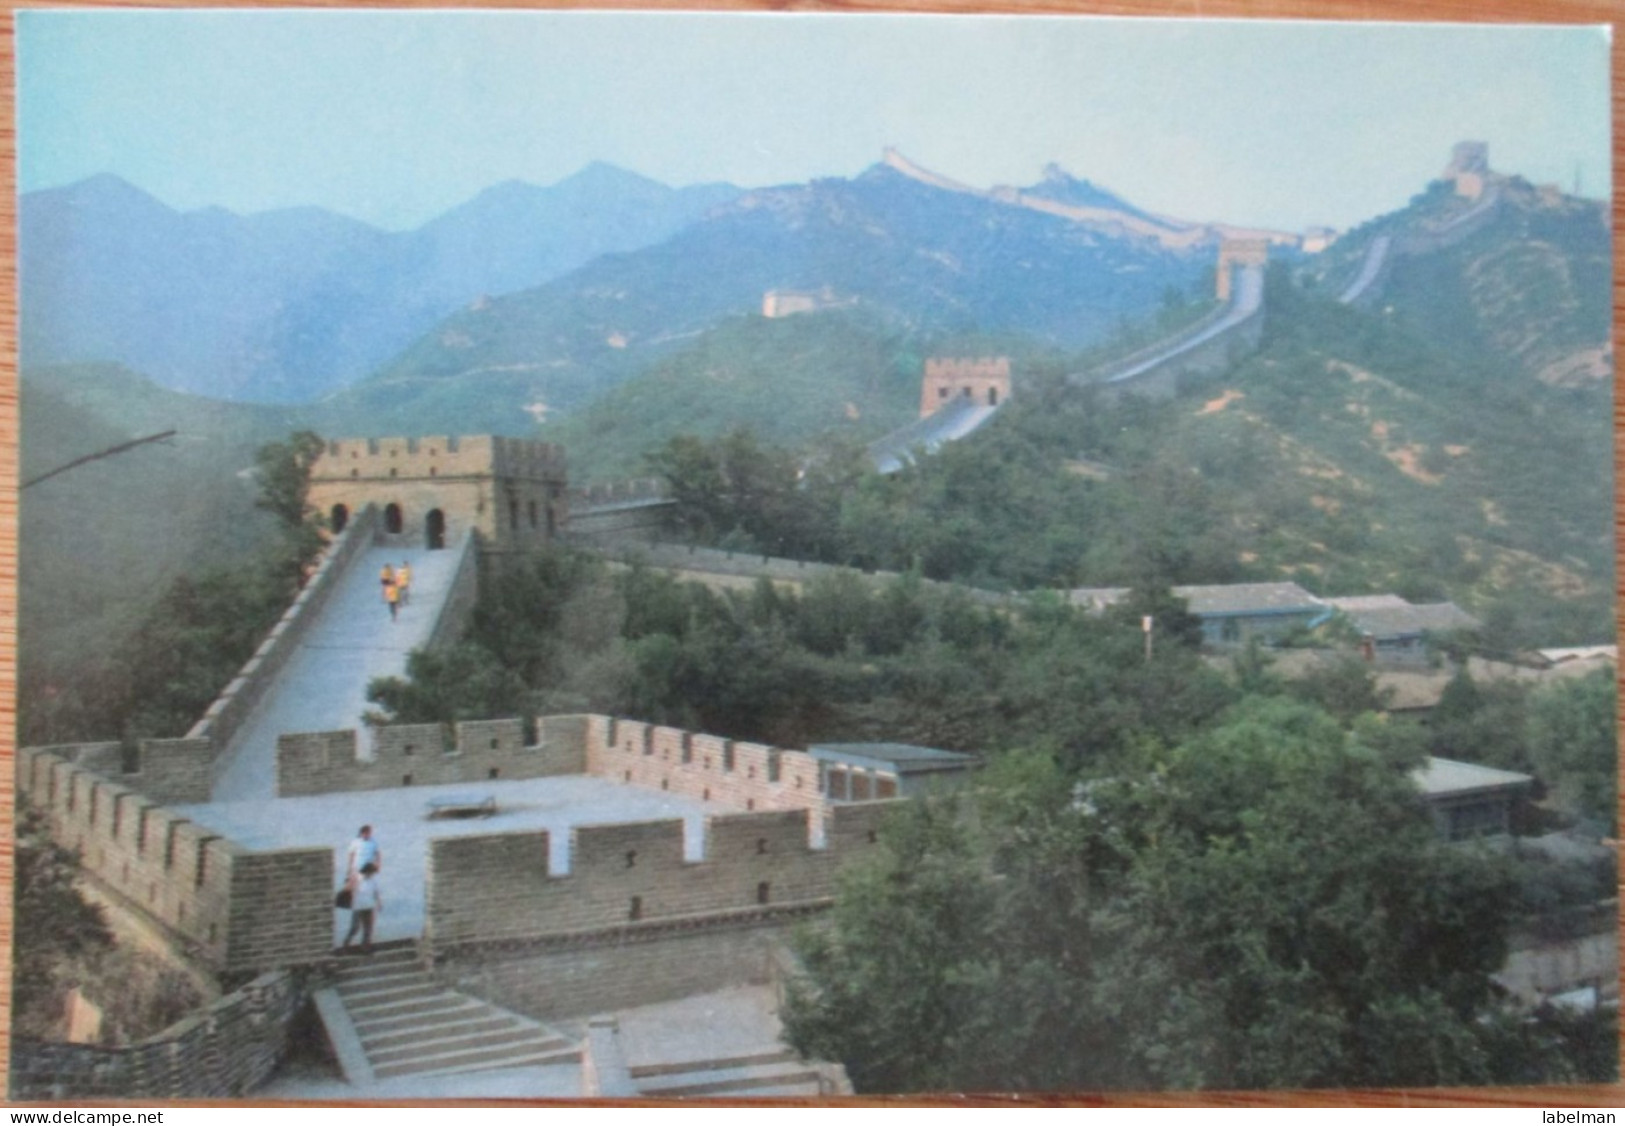 CHINA PEOPLES REPUBLIC GREAT WALL CARD KARTE POSTCARD ANSICHTSKARTE CARTOLINA CARD POSTKARTE CARTE POSTALE - China